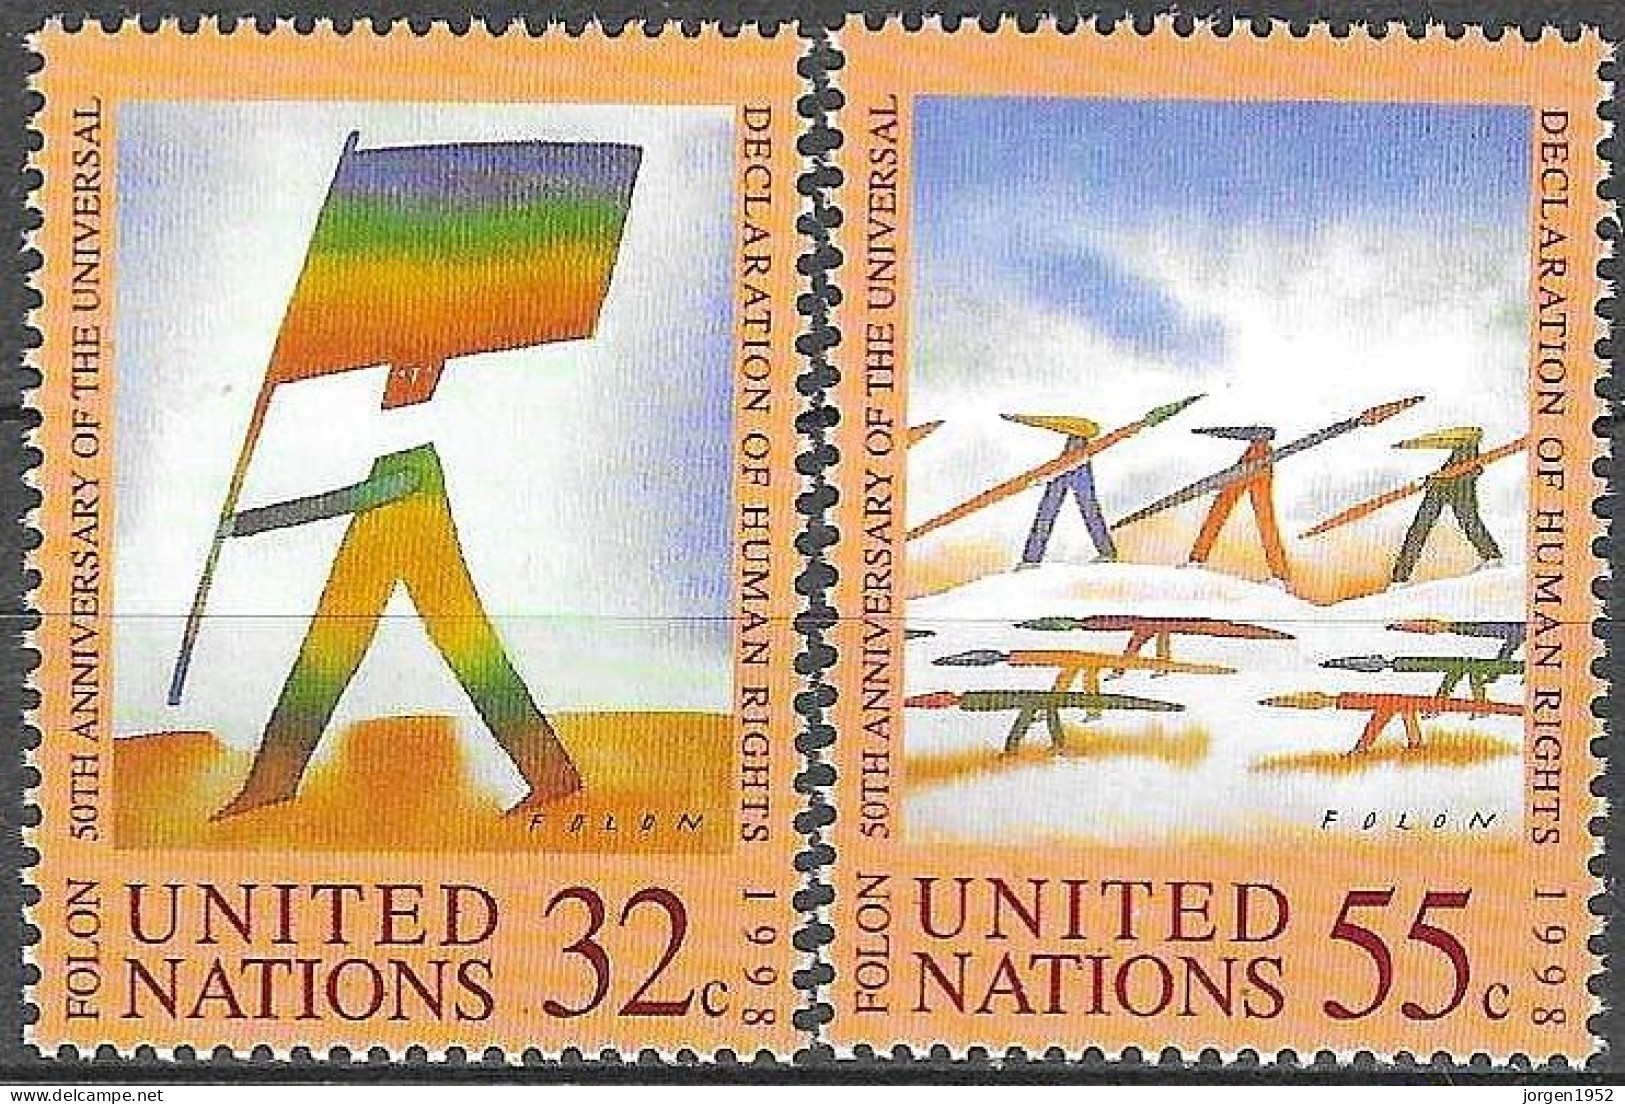 UNITED NATIONS # NEW YORK FROM 1998 STAMPWORLD 787-88** - Ungebraucht